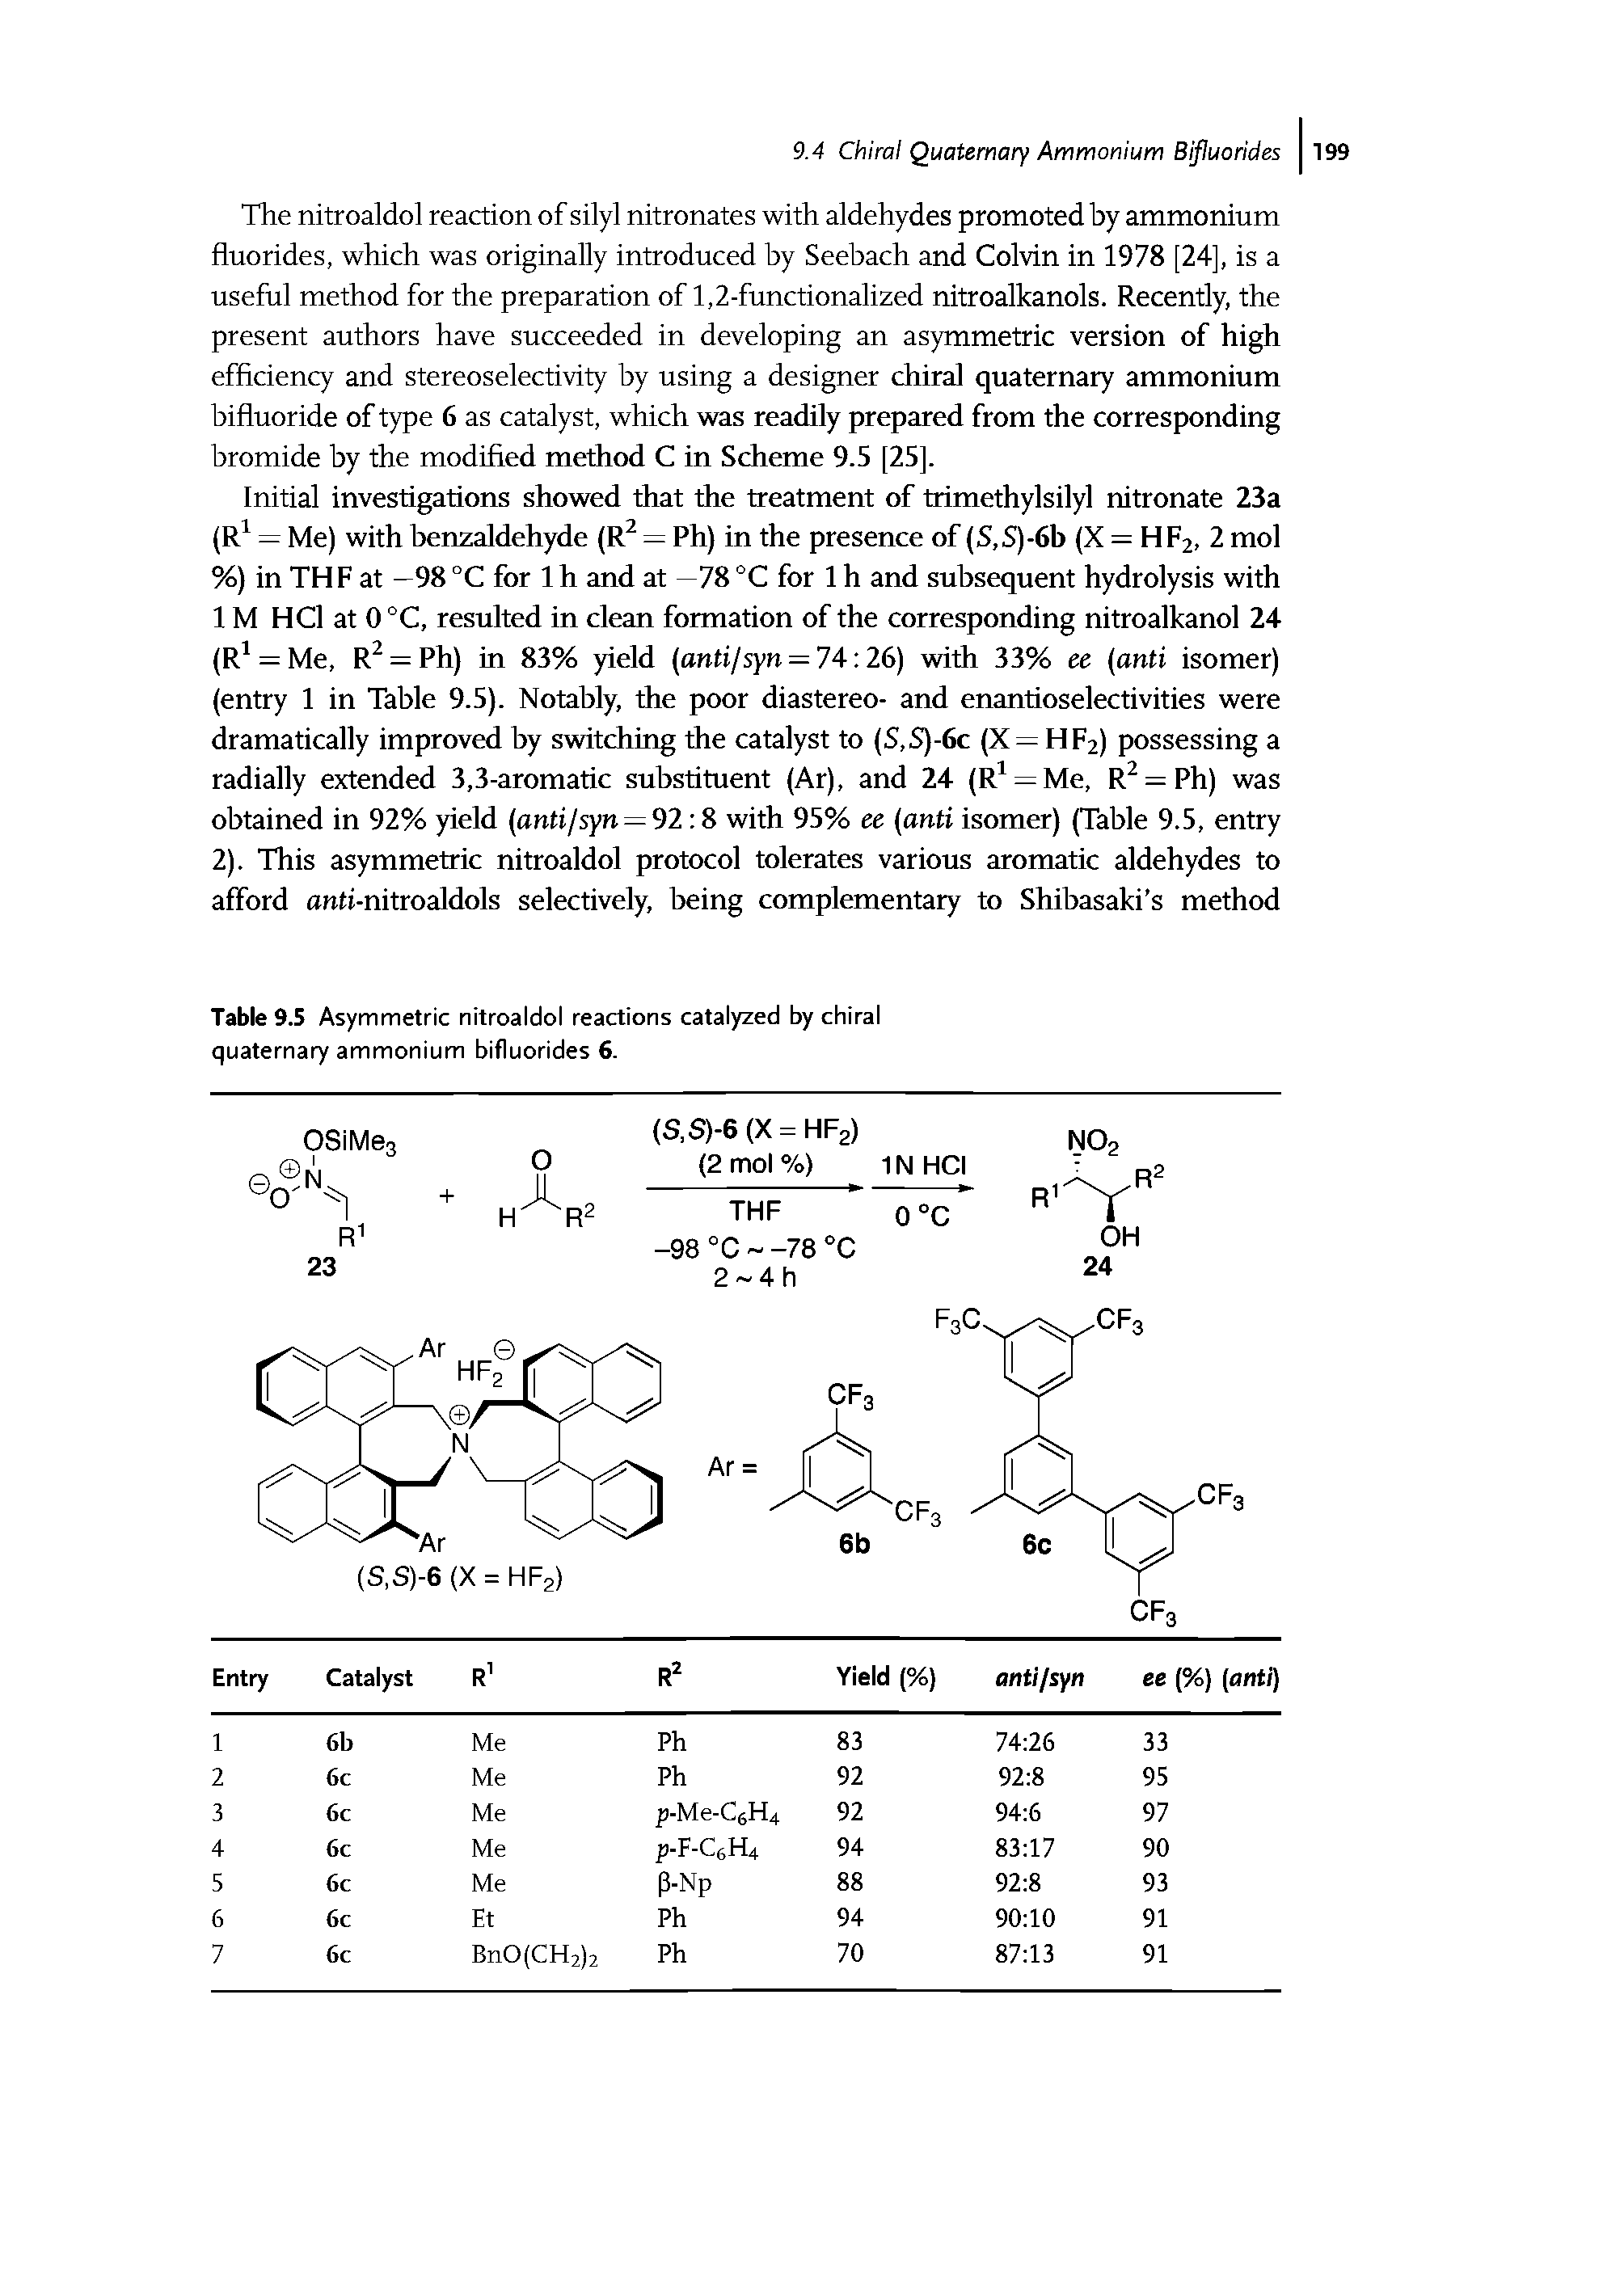 Table 9.5 Asymmetric nitroaldol reactions catalyzed by chiral quaternary ammonium bifluorides 6.